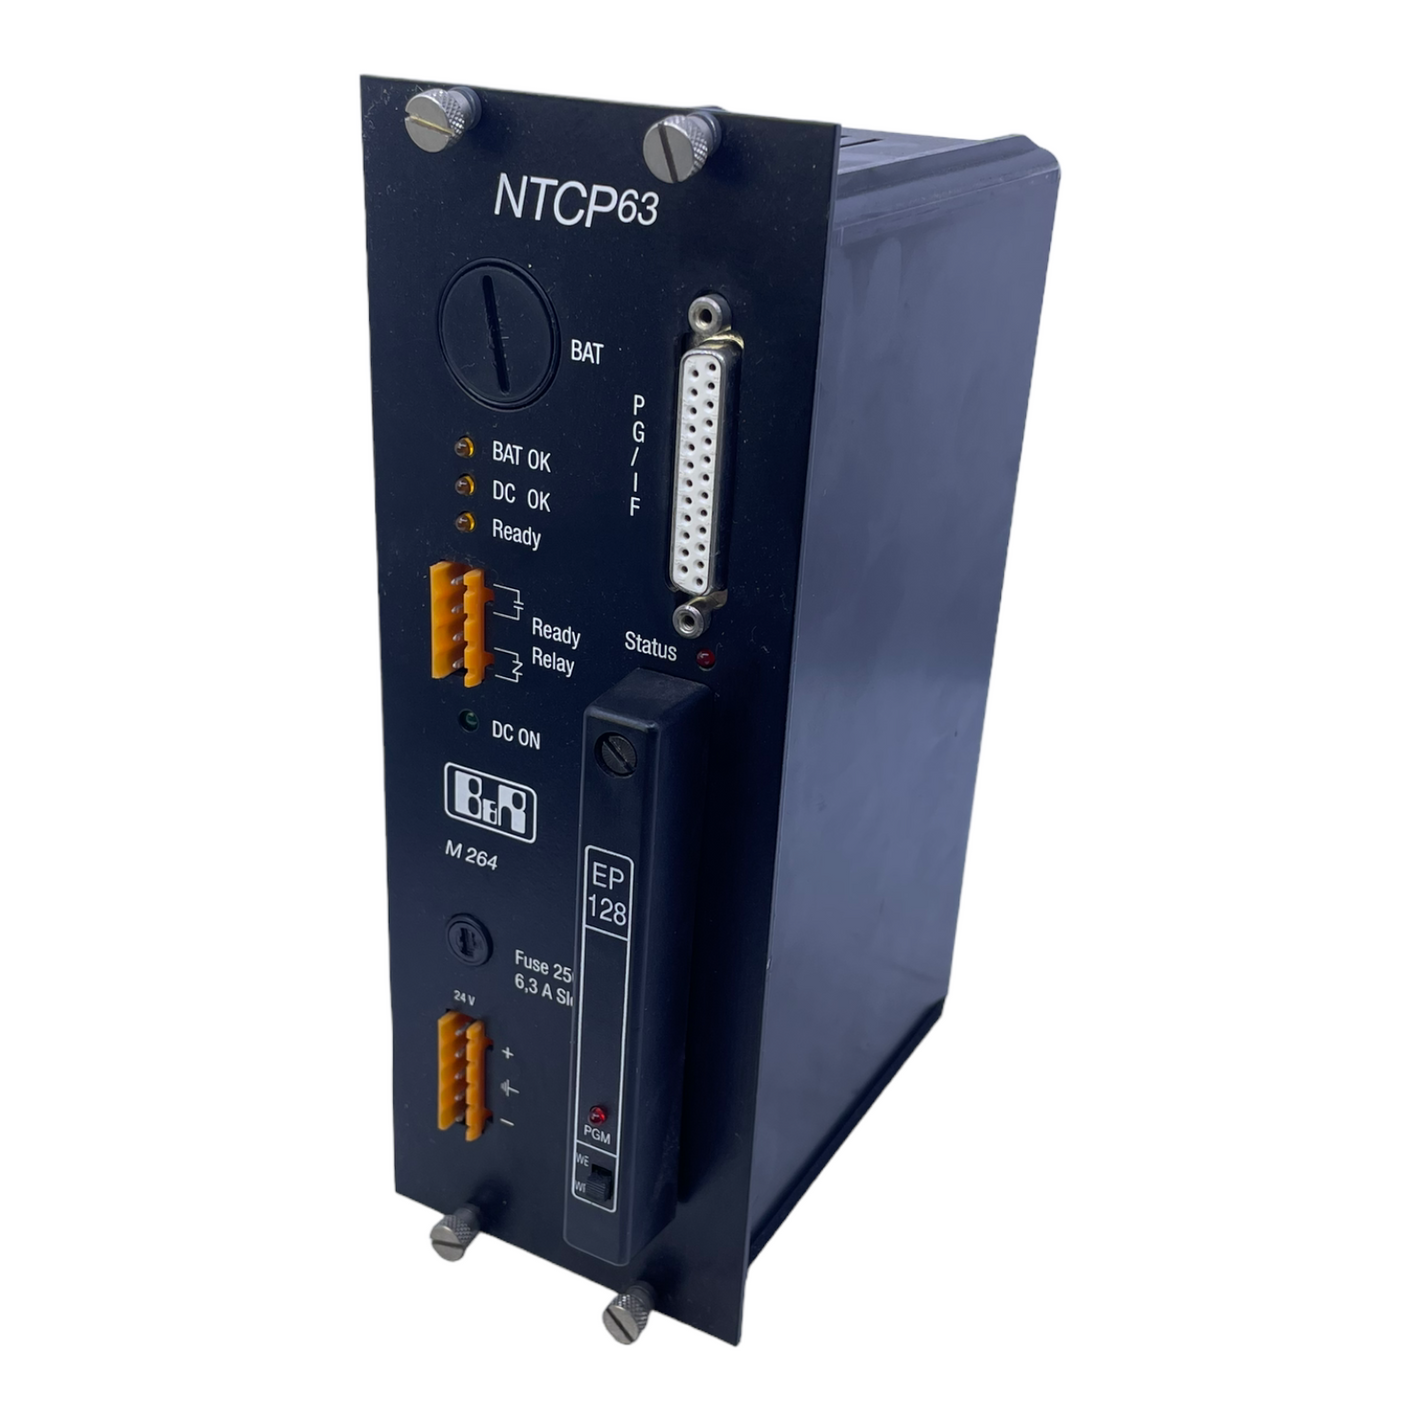 B&amp;R M2NTCP63-0 multicontrol module NTCP63 Fuse 250V 6.3A Slow B&amp;R Multicontrol 